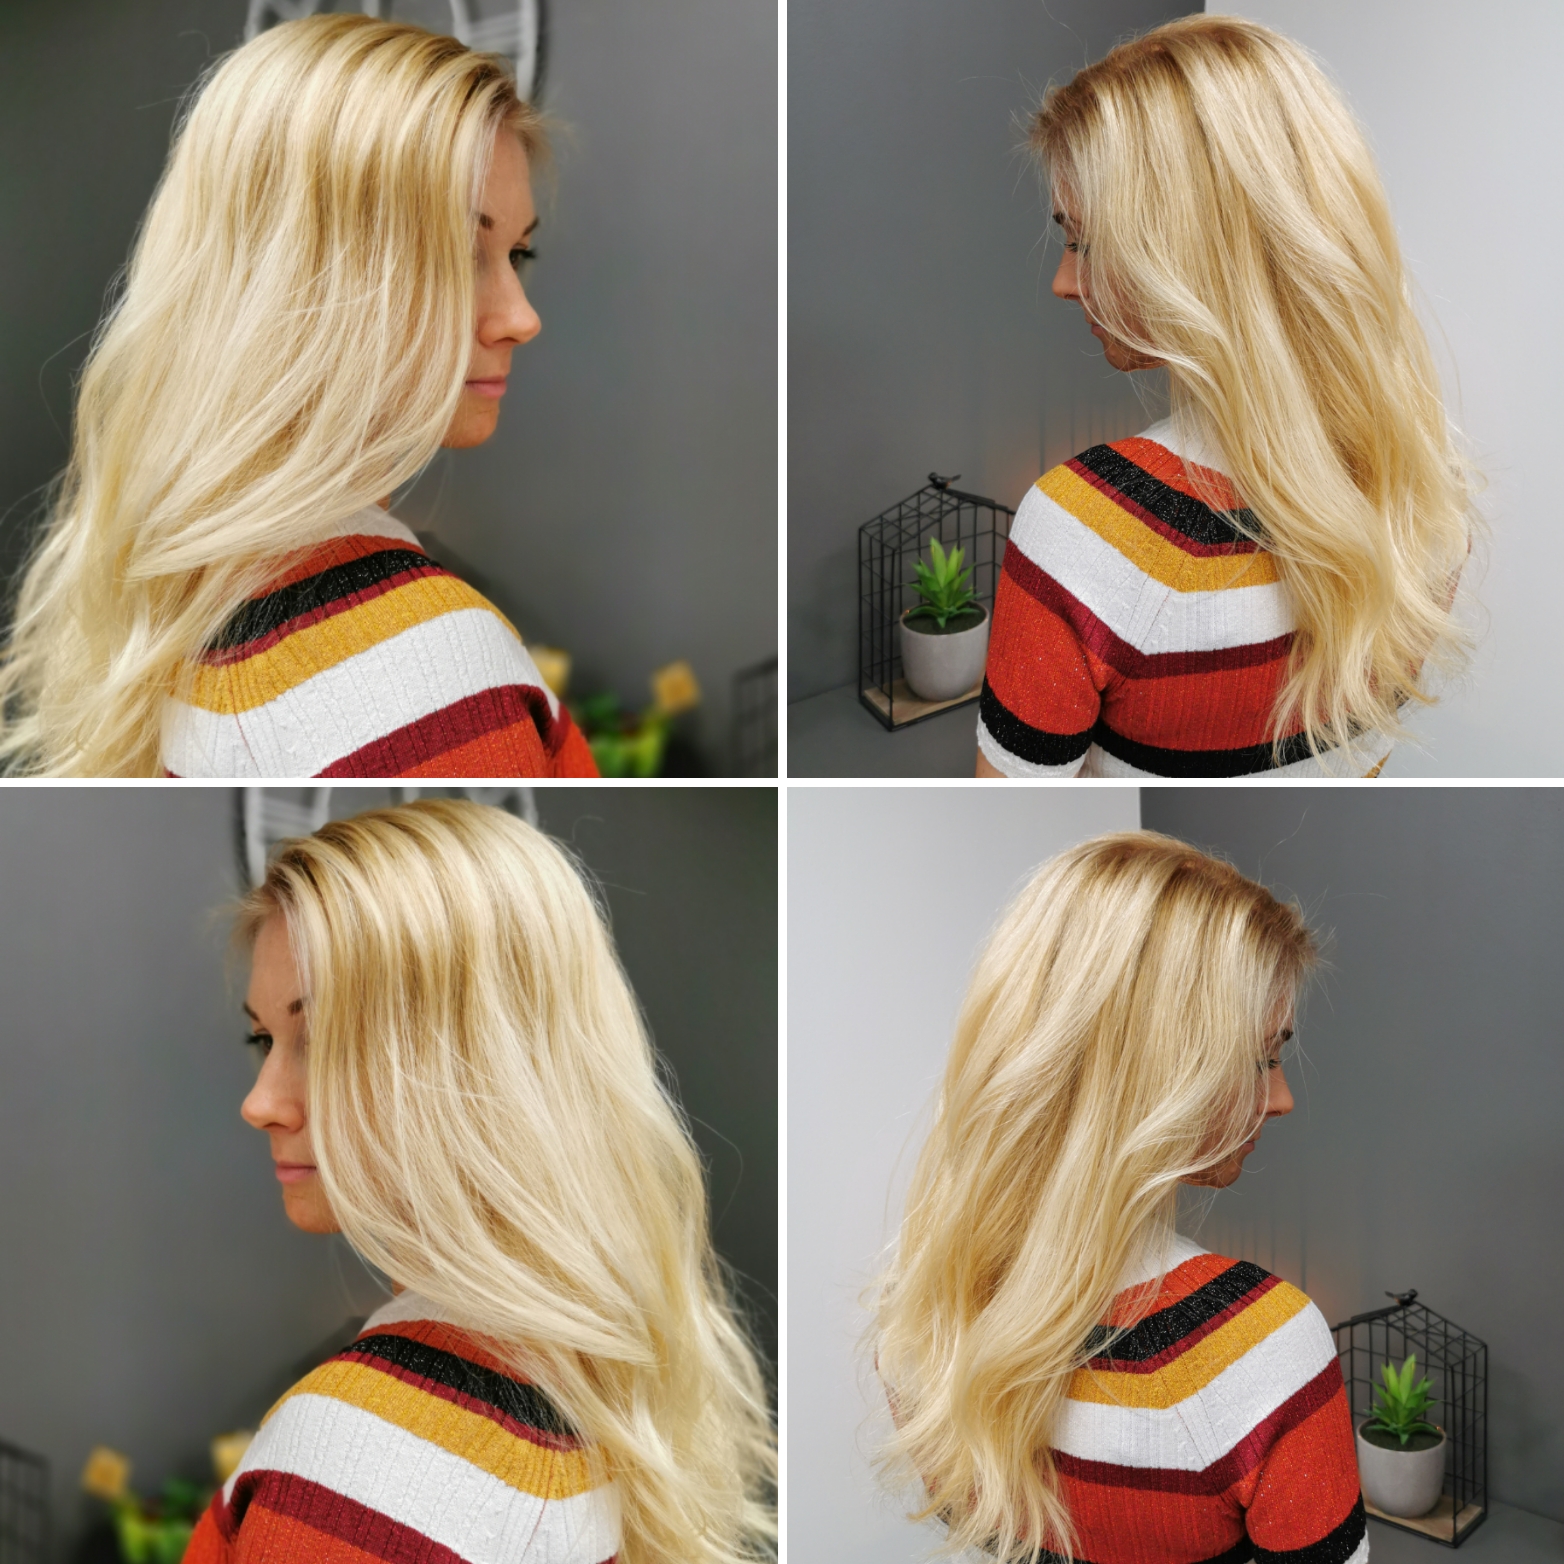 Hair Got Styled by Heidi Usai